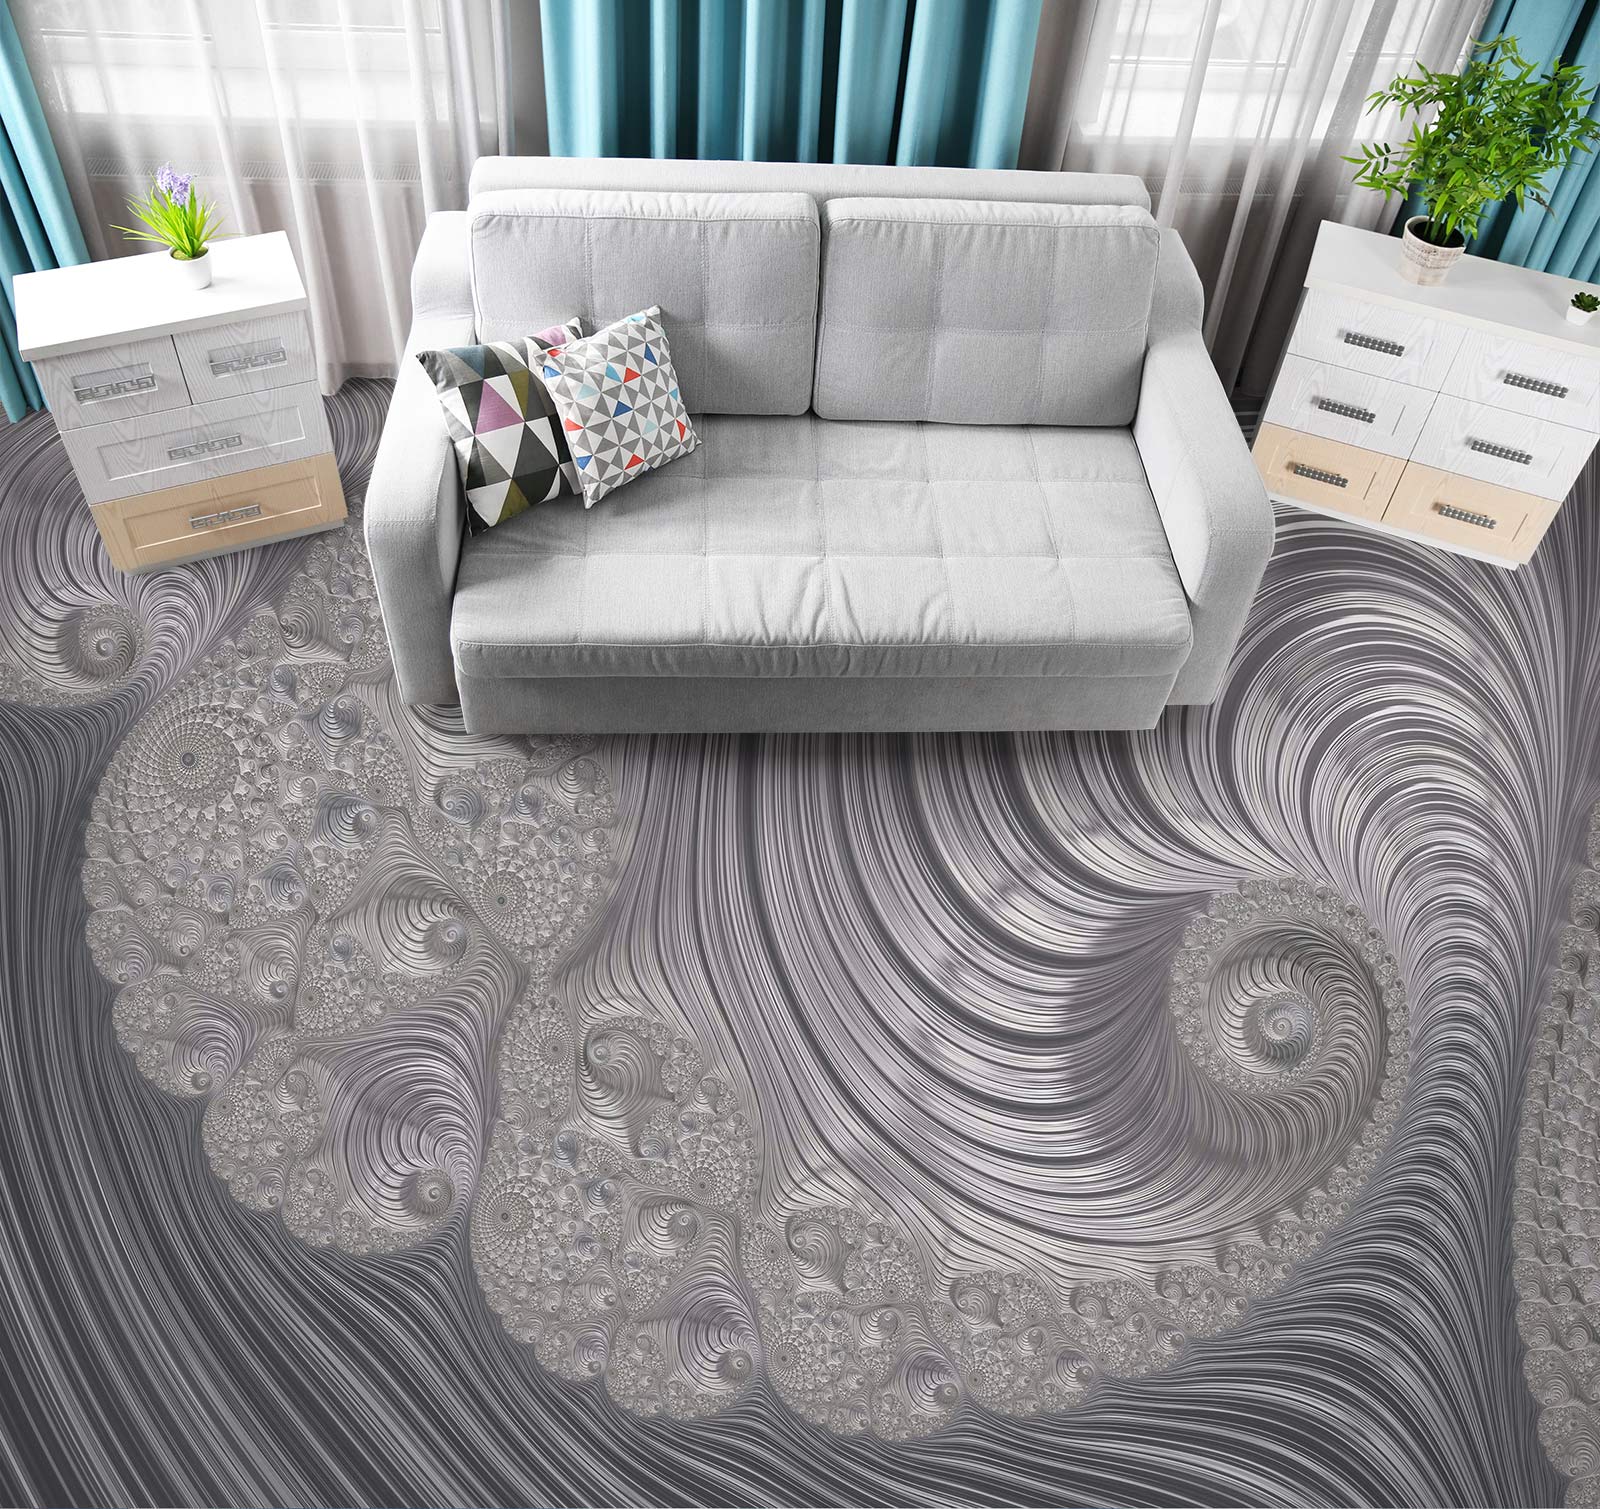 3D Grey Pattern Thread 102147 Andrea Haase Floor Mural  Wallpaper Murals Self-Adhesive Removable Print Epoxy